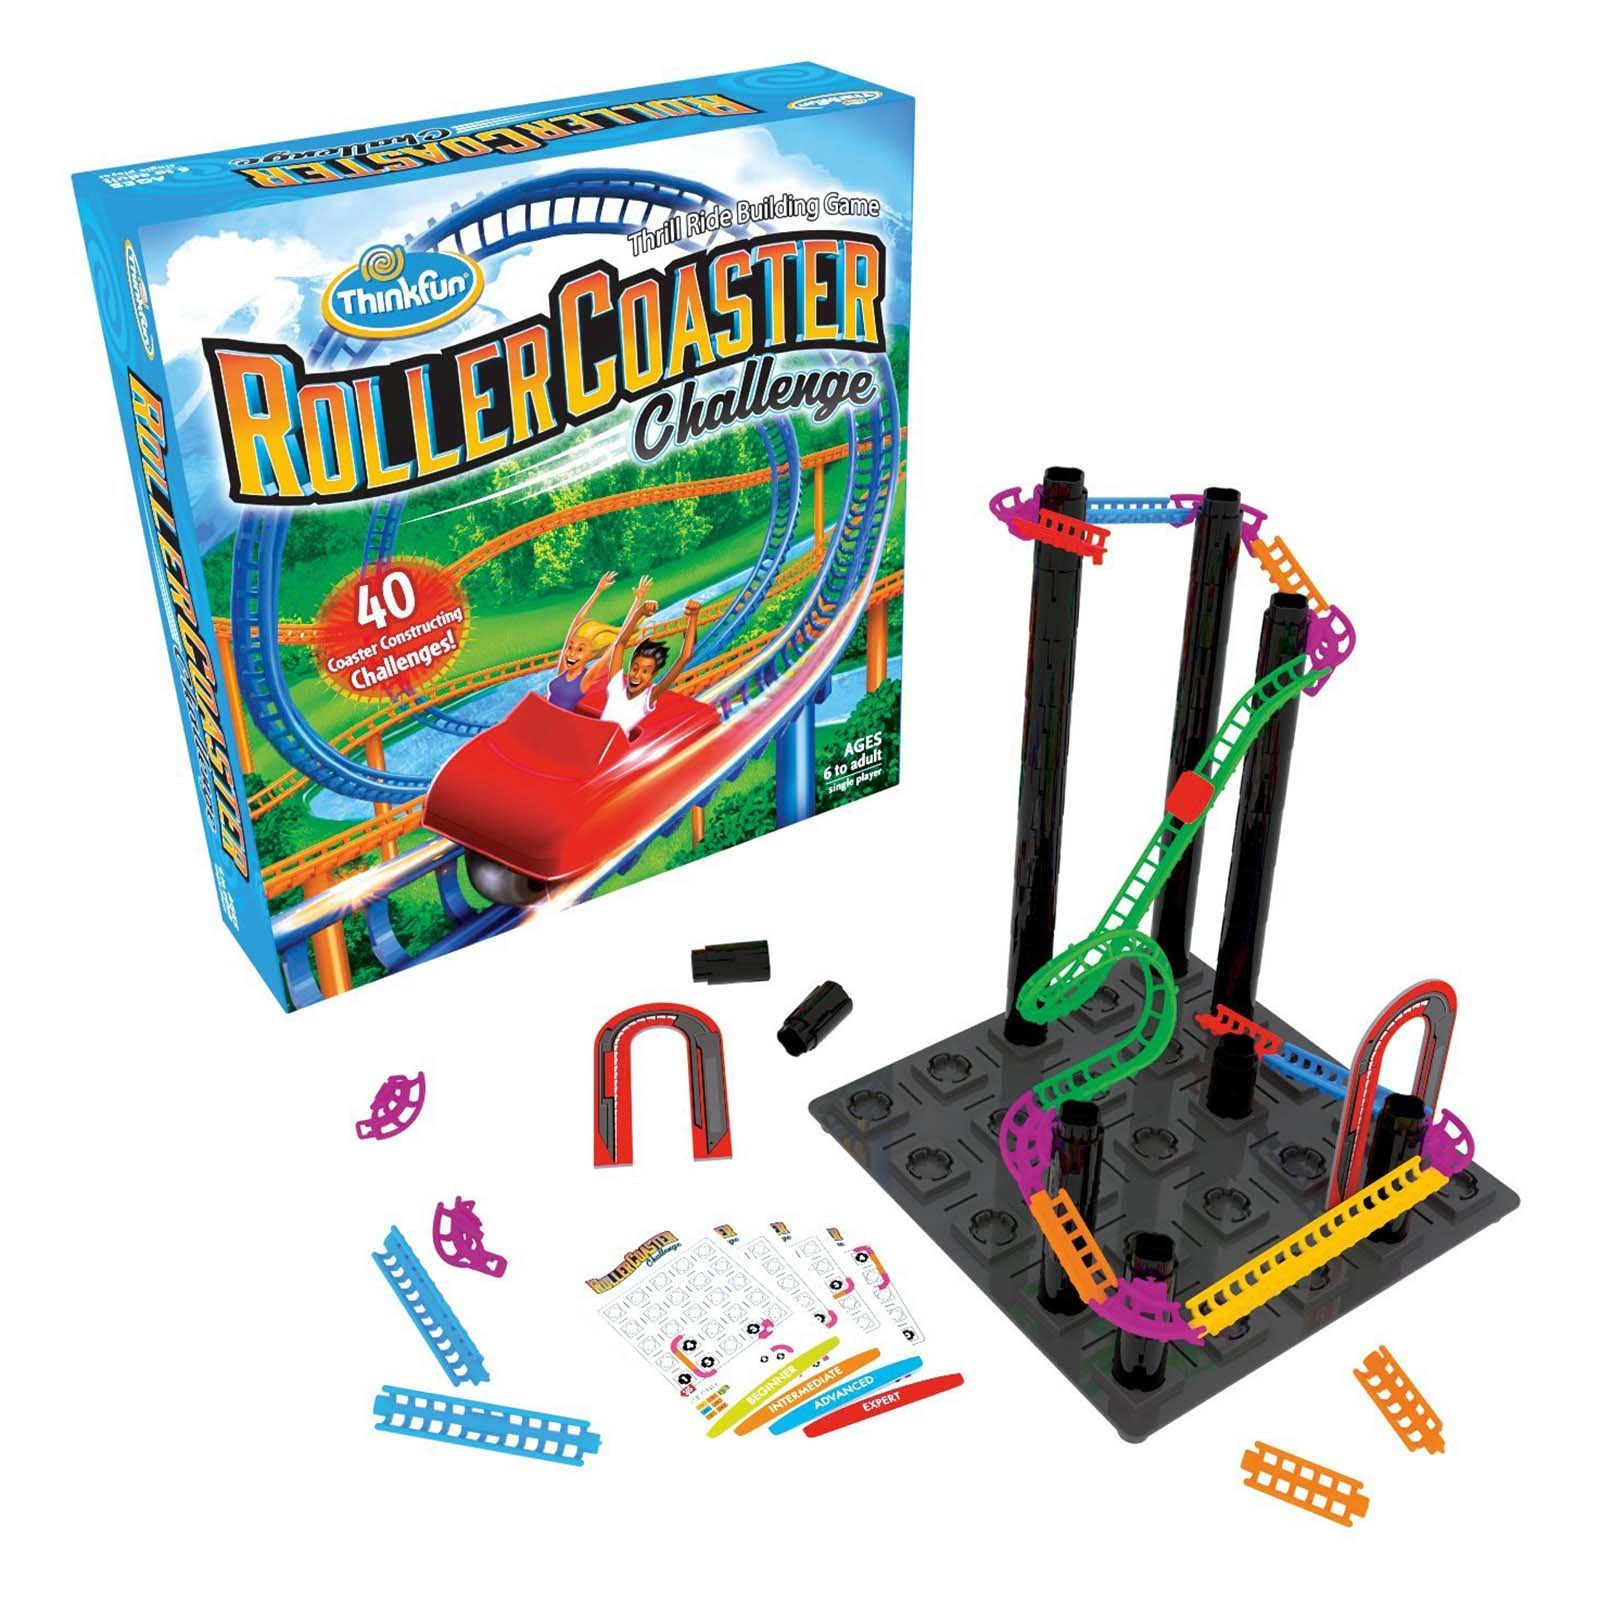 Thinkfun Roller Coaster Challenge Toy Set